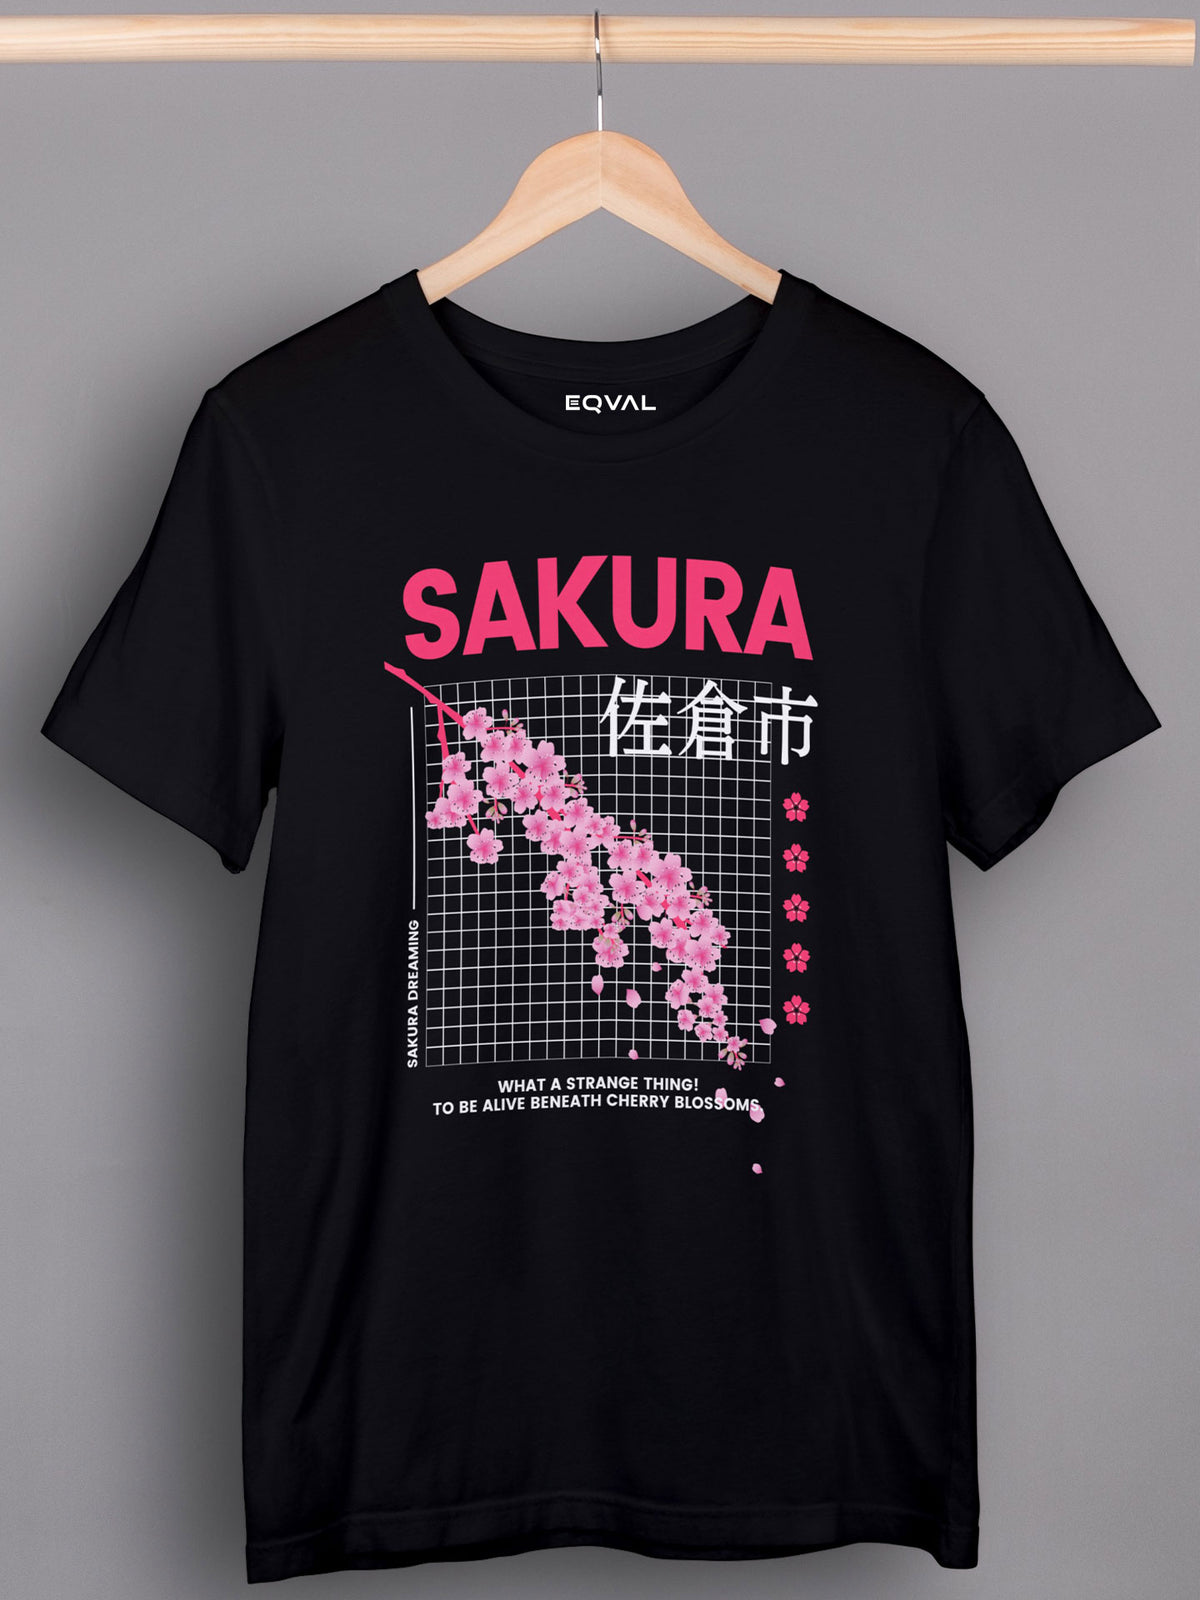 Men's Black Sakura Printed T-shirt